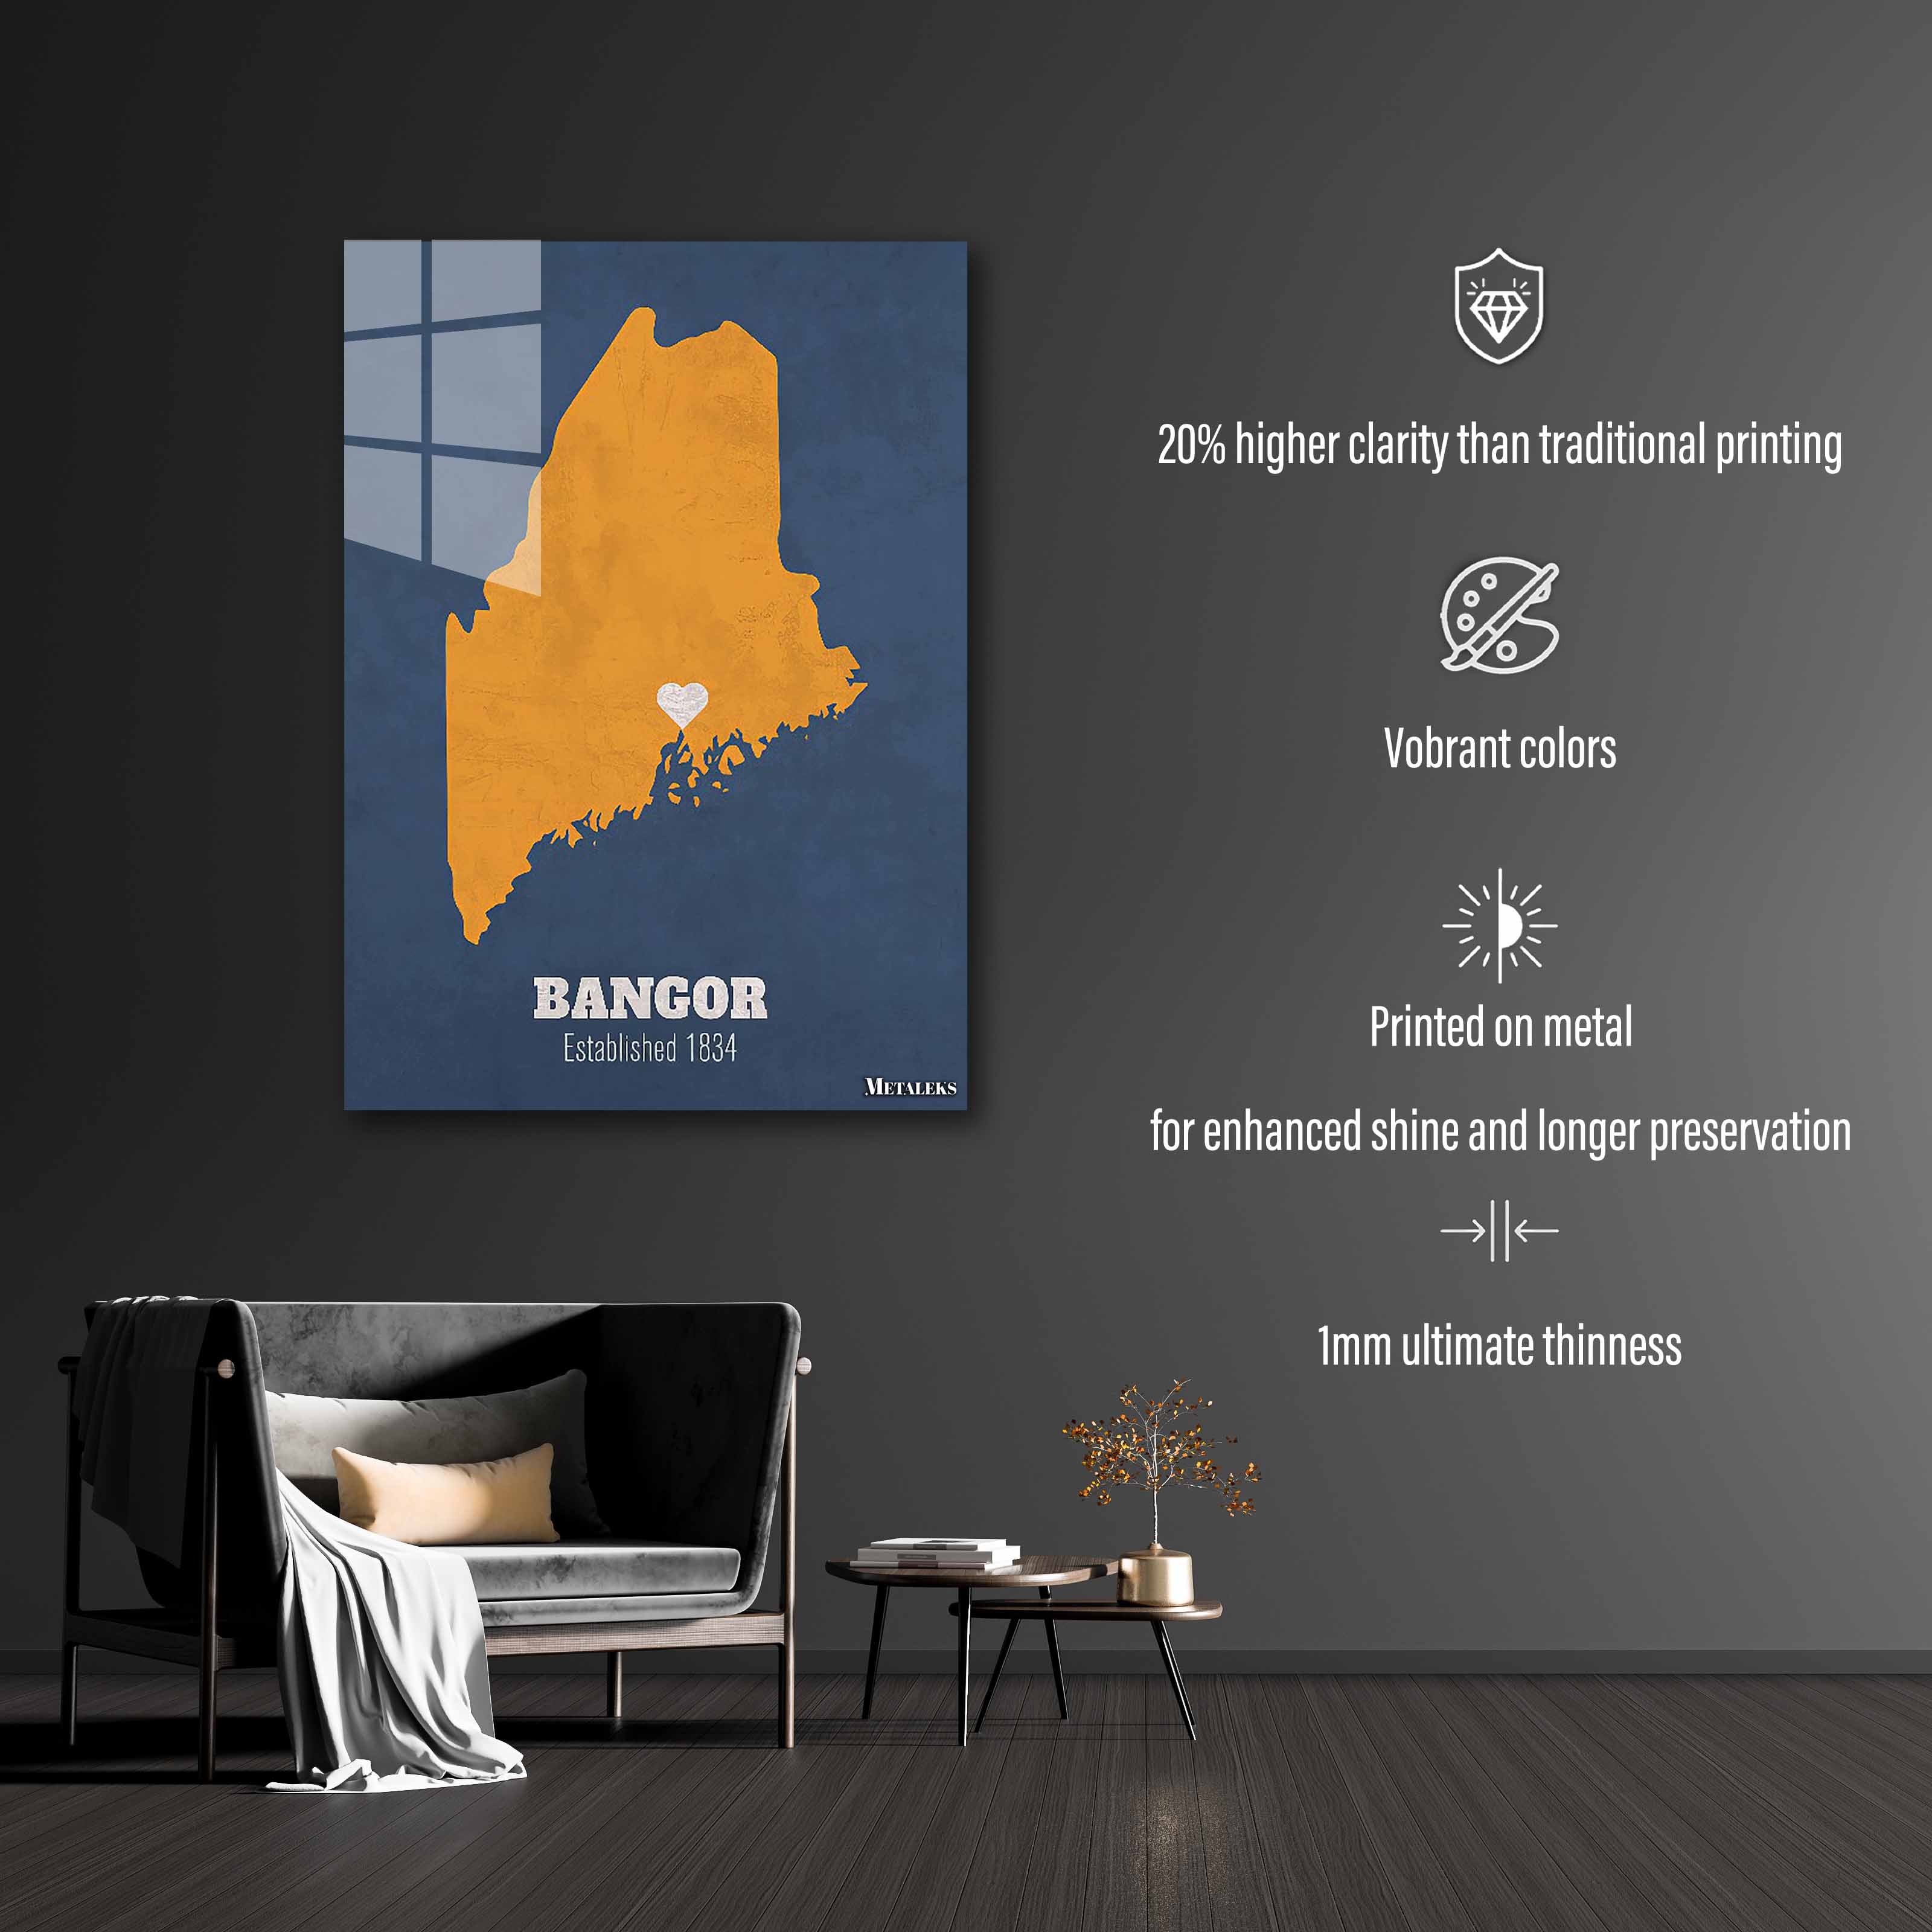 Bangor-designed by @ Enel Lighting